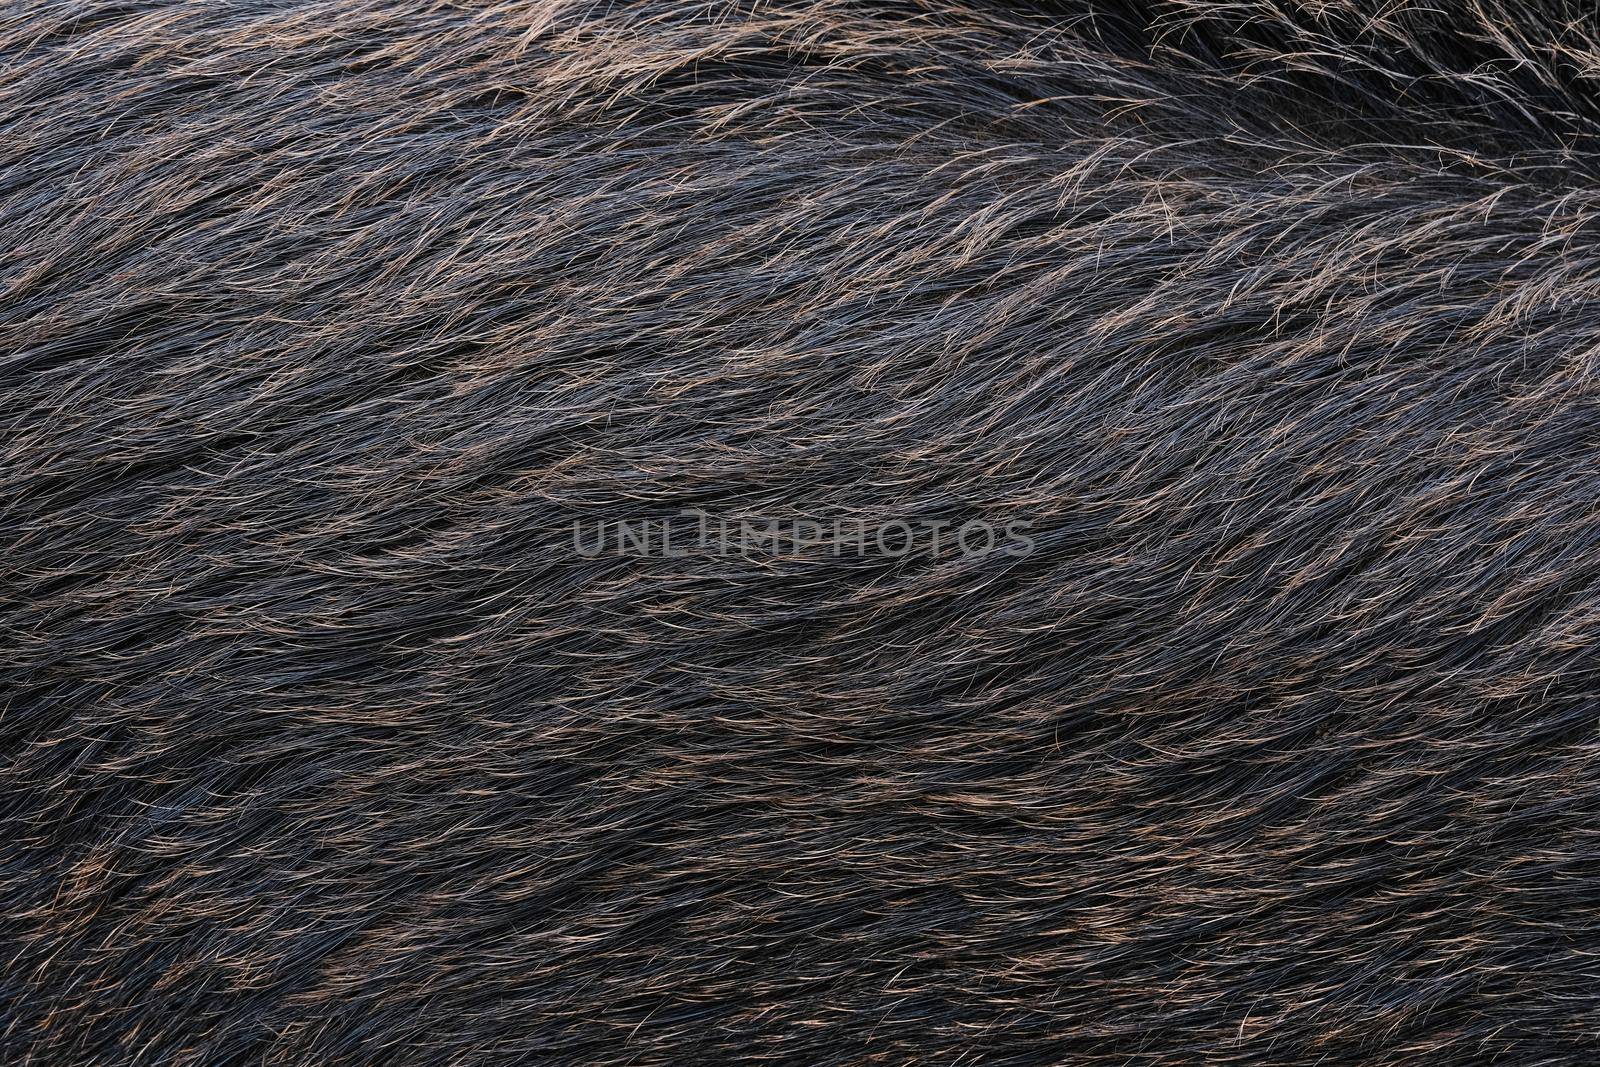 Close up on gray wild boar hair. Animal fur banner.